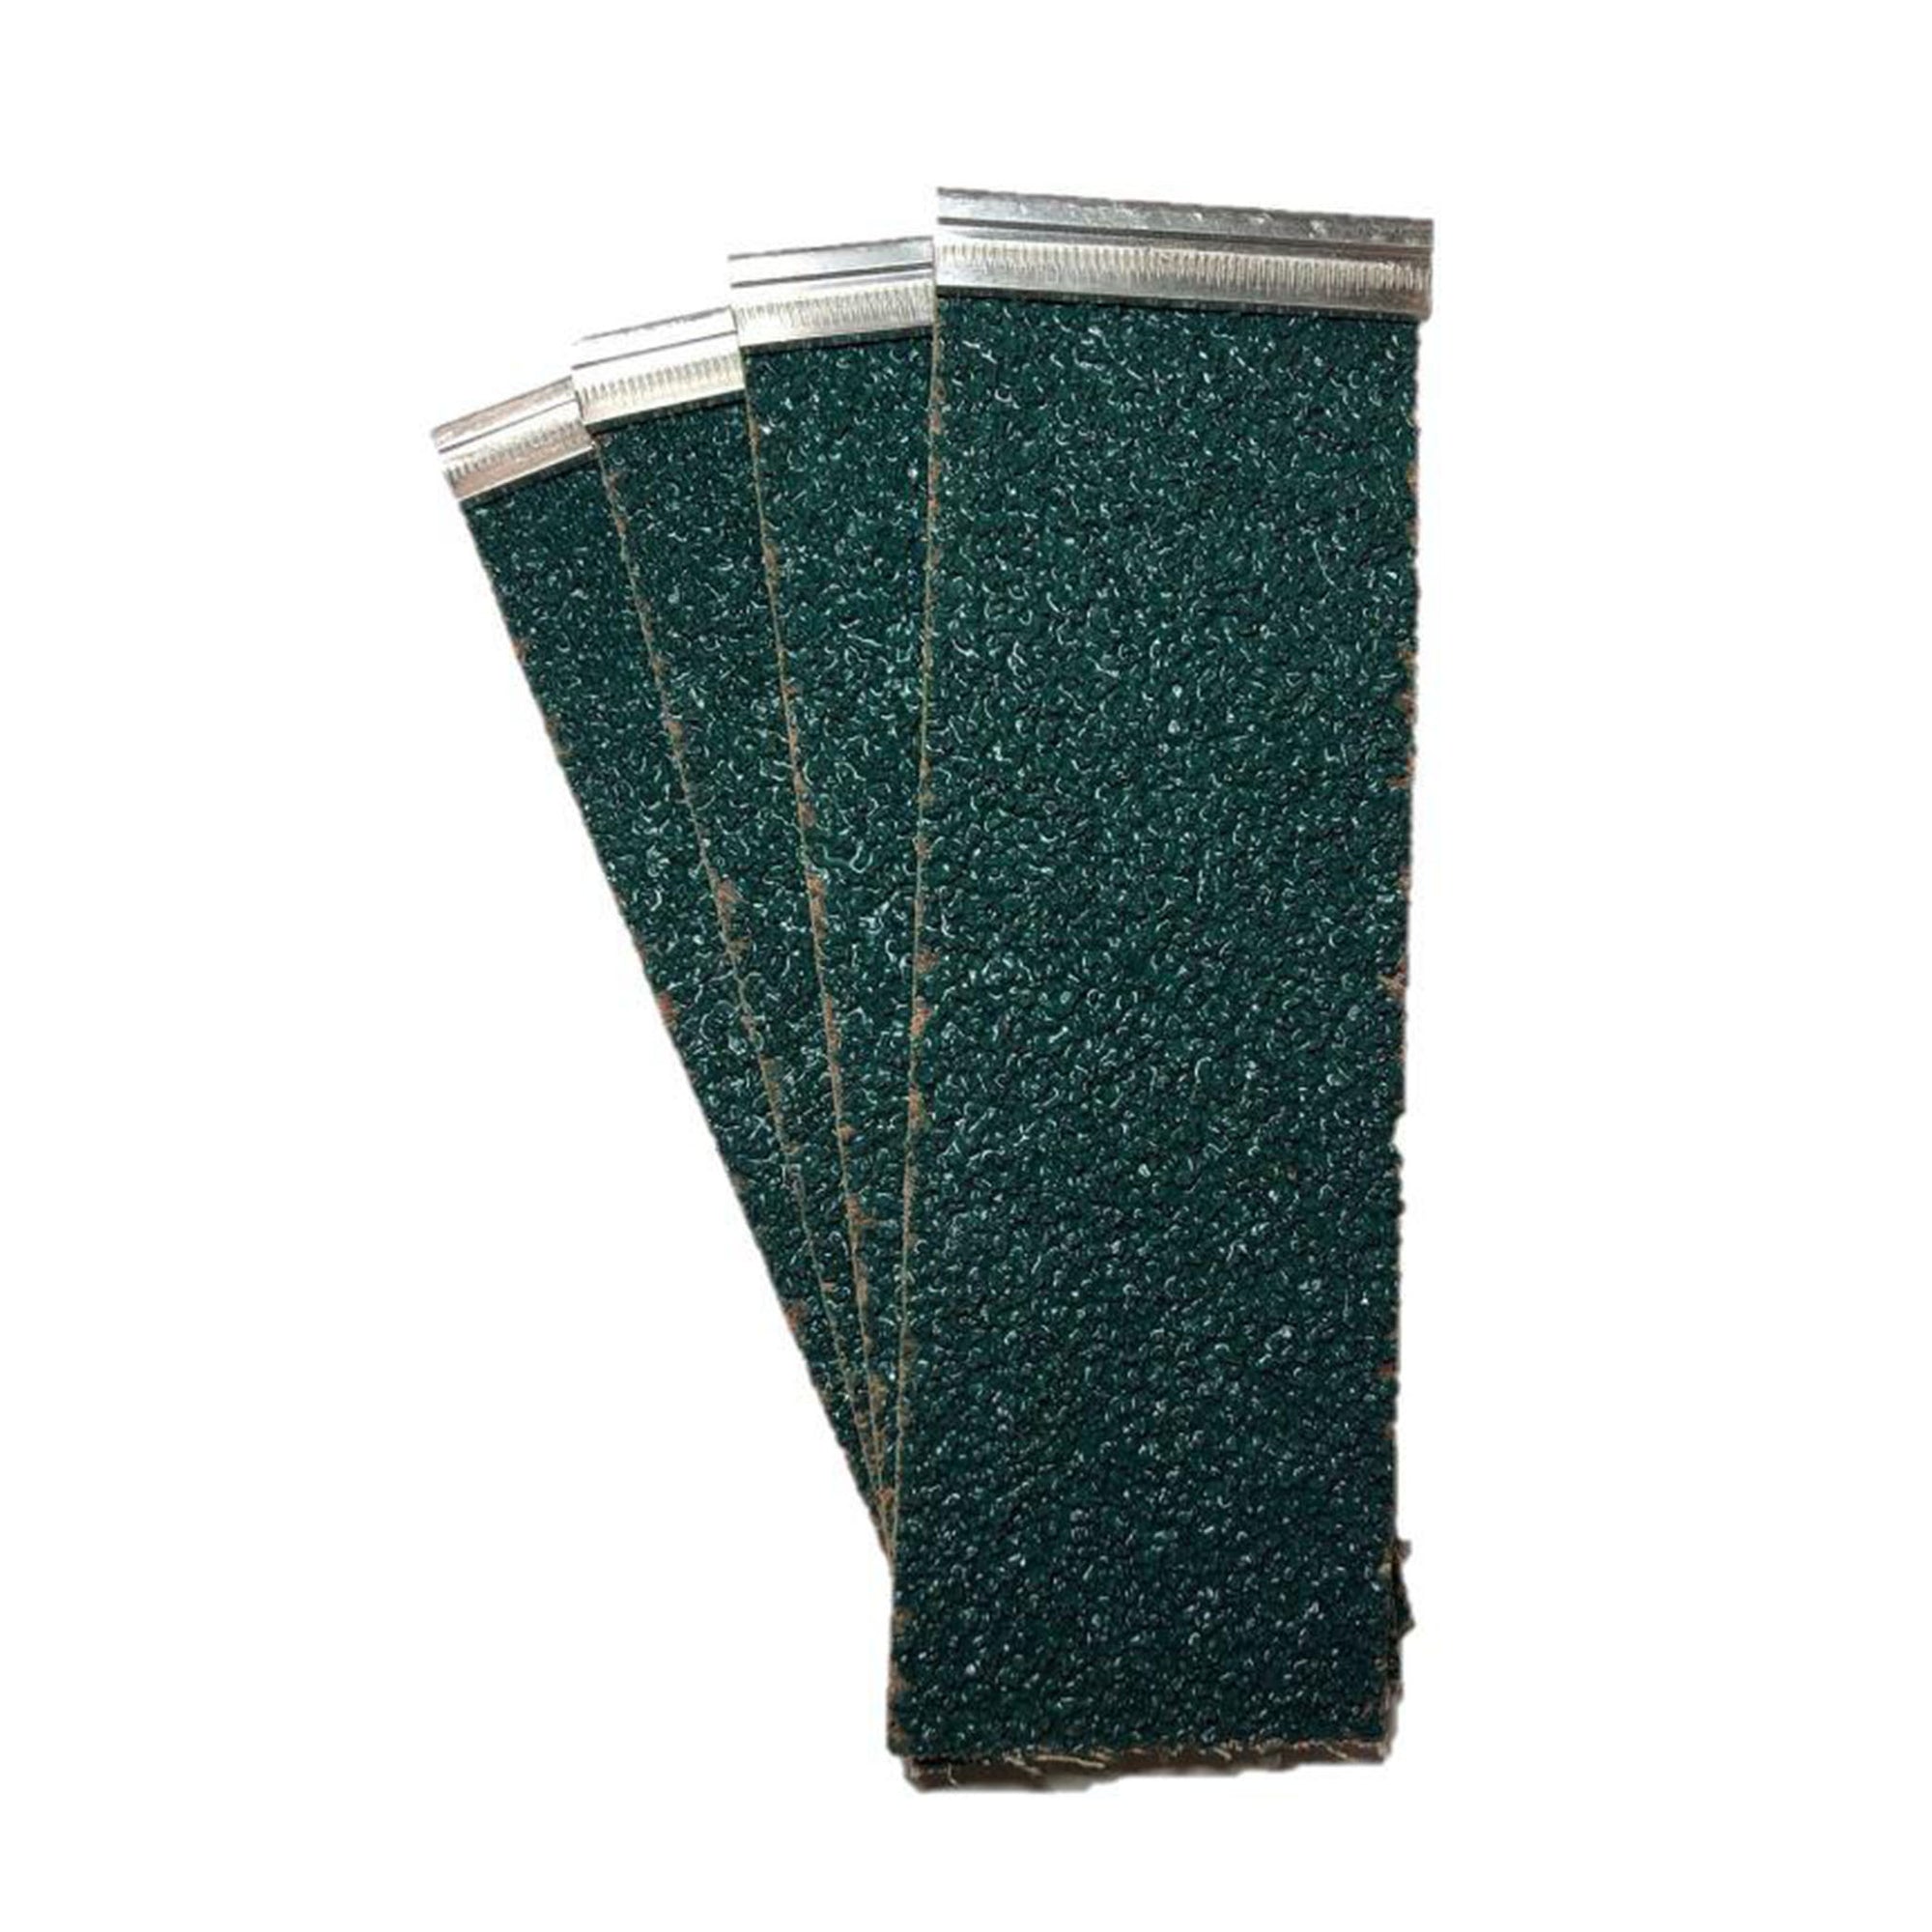 Renssi Sandpaper Blade Pack - width 50mm, length 150mm